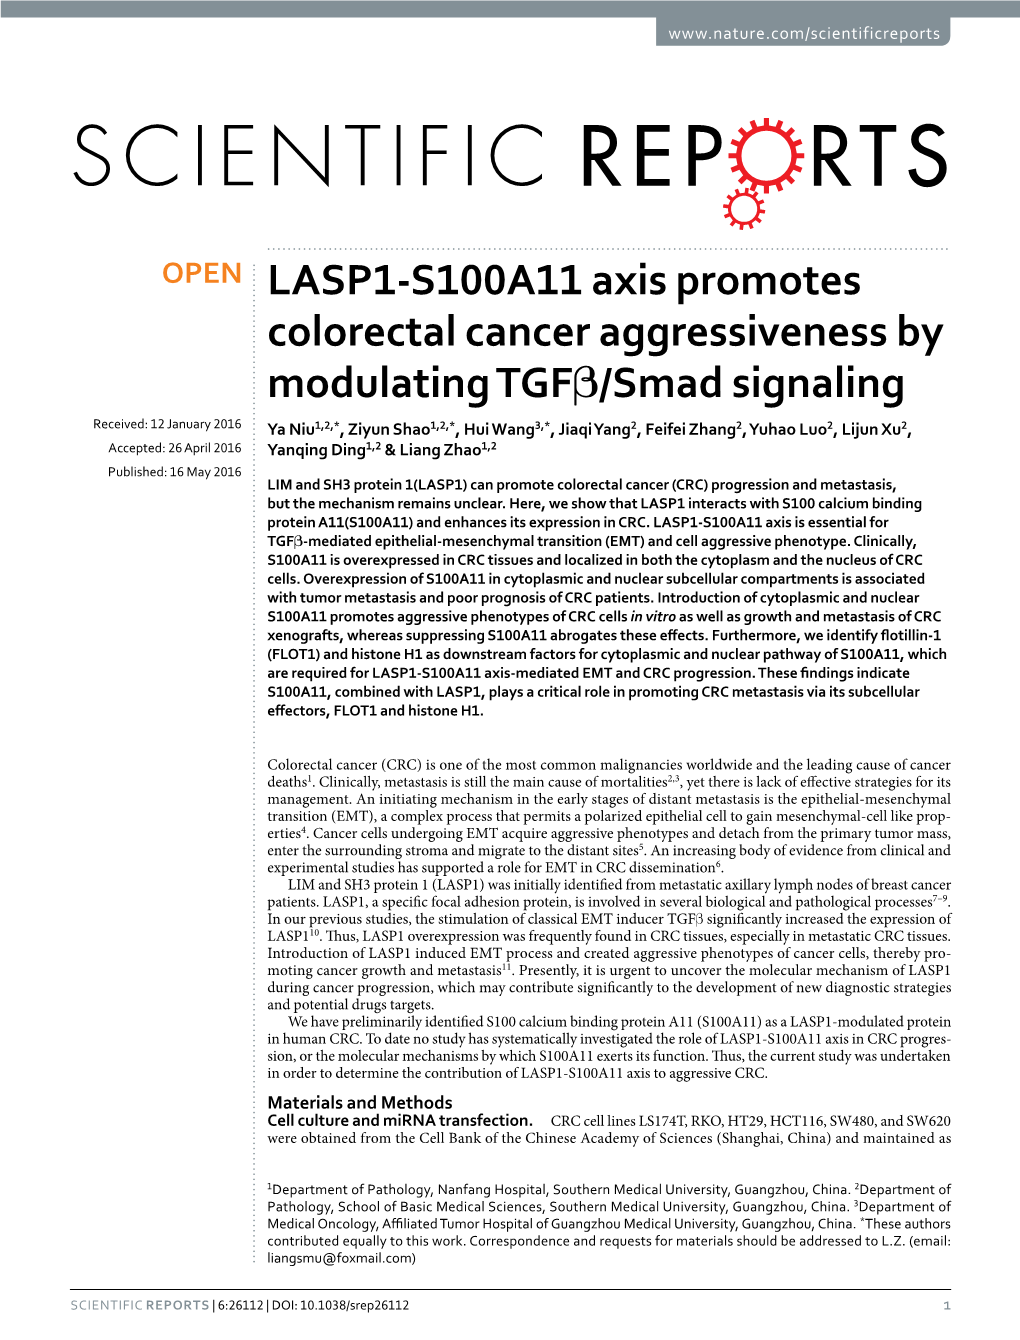 LASP1-S100A11 Axis Promotes Colorectal Cancer Aggressiveness